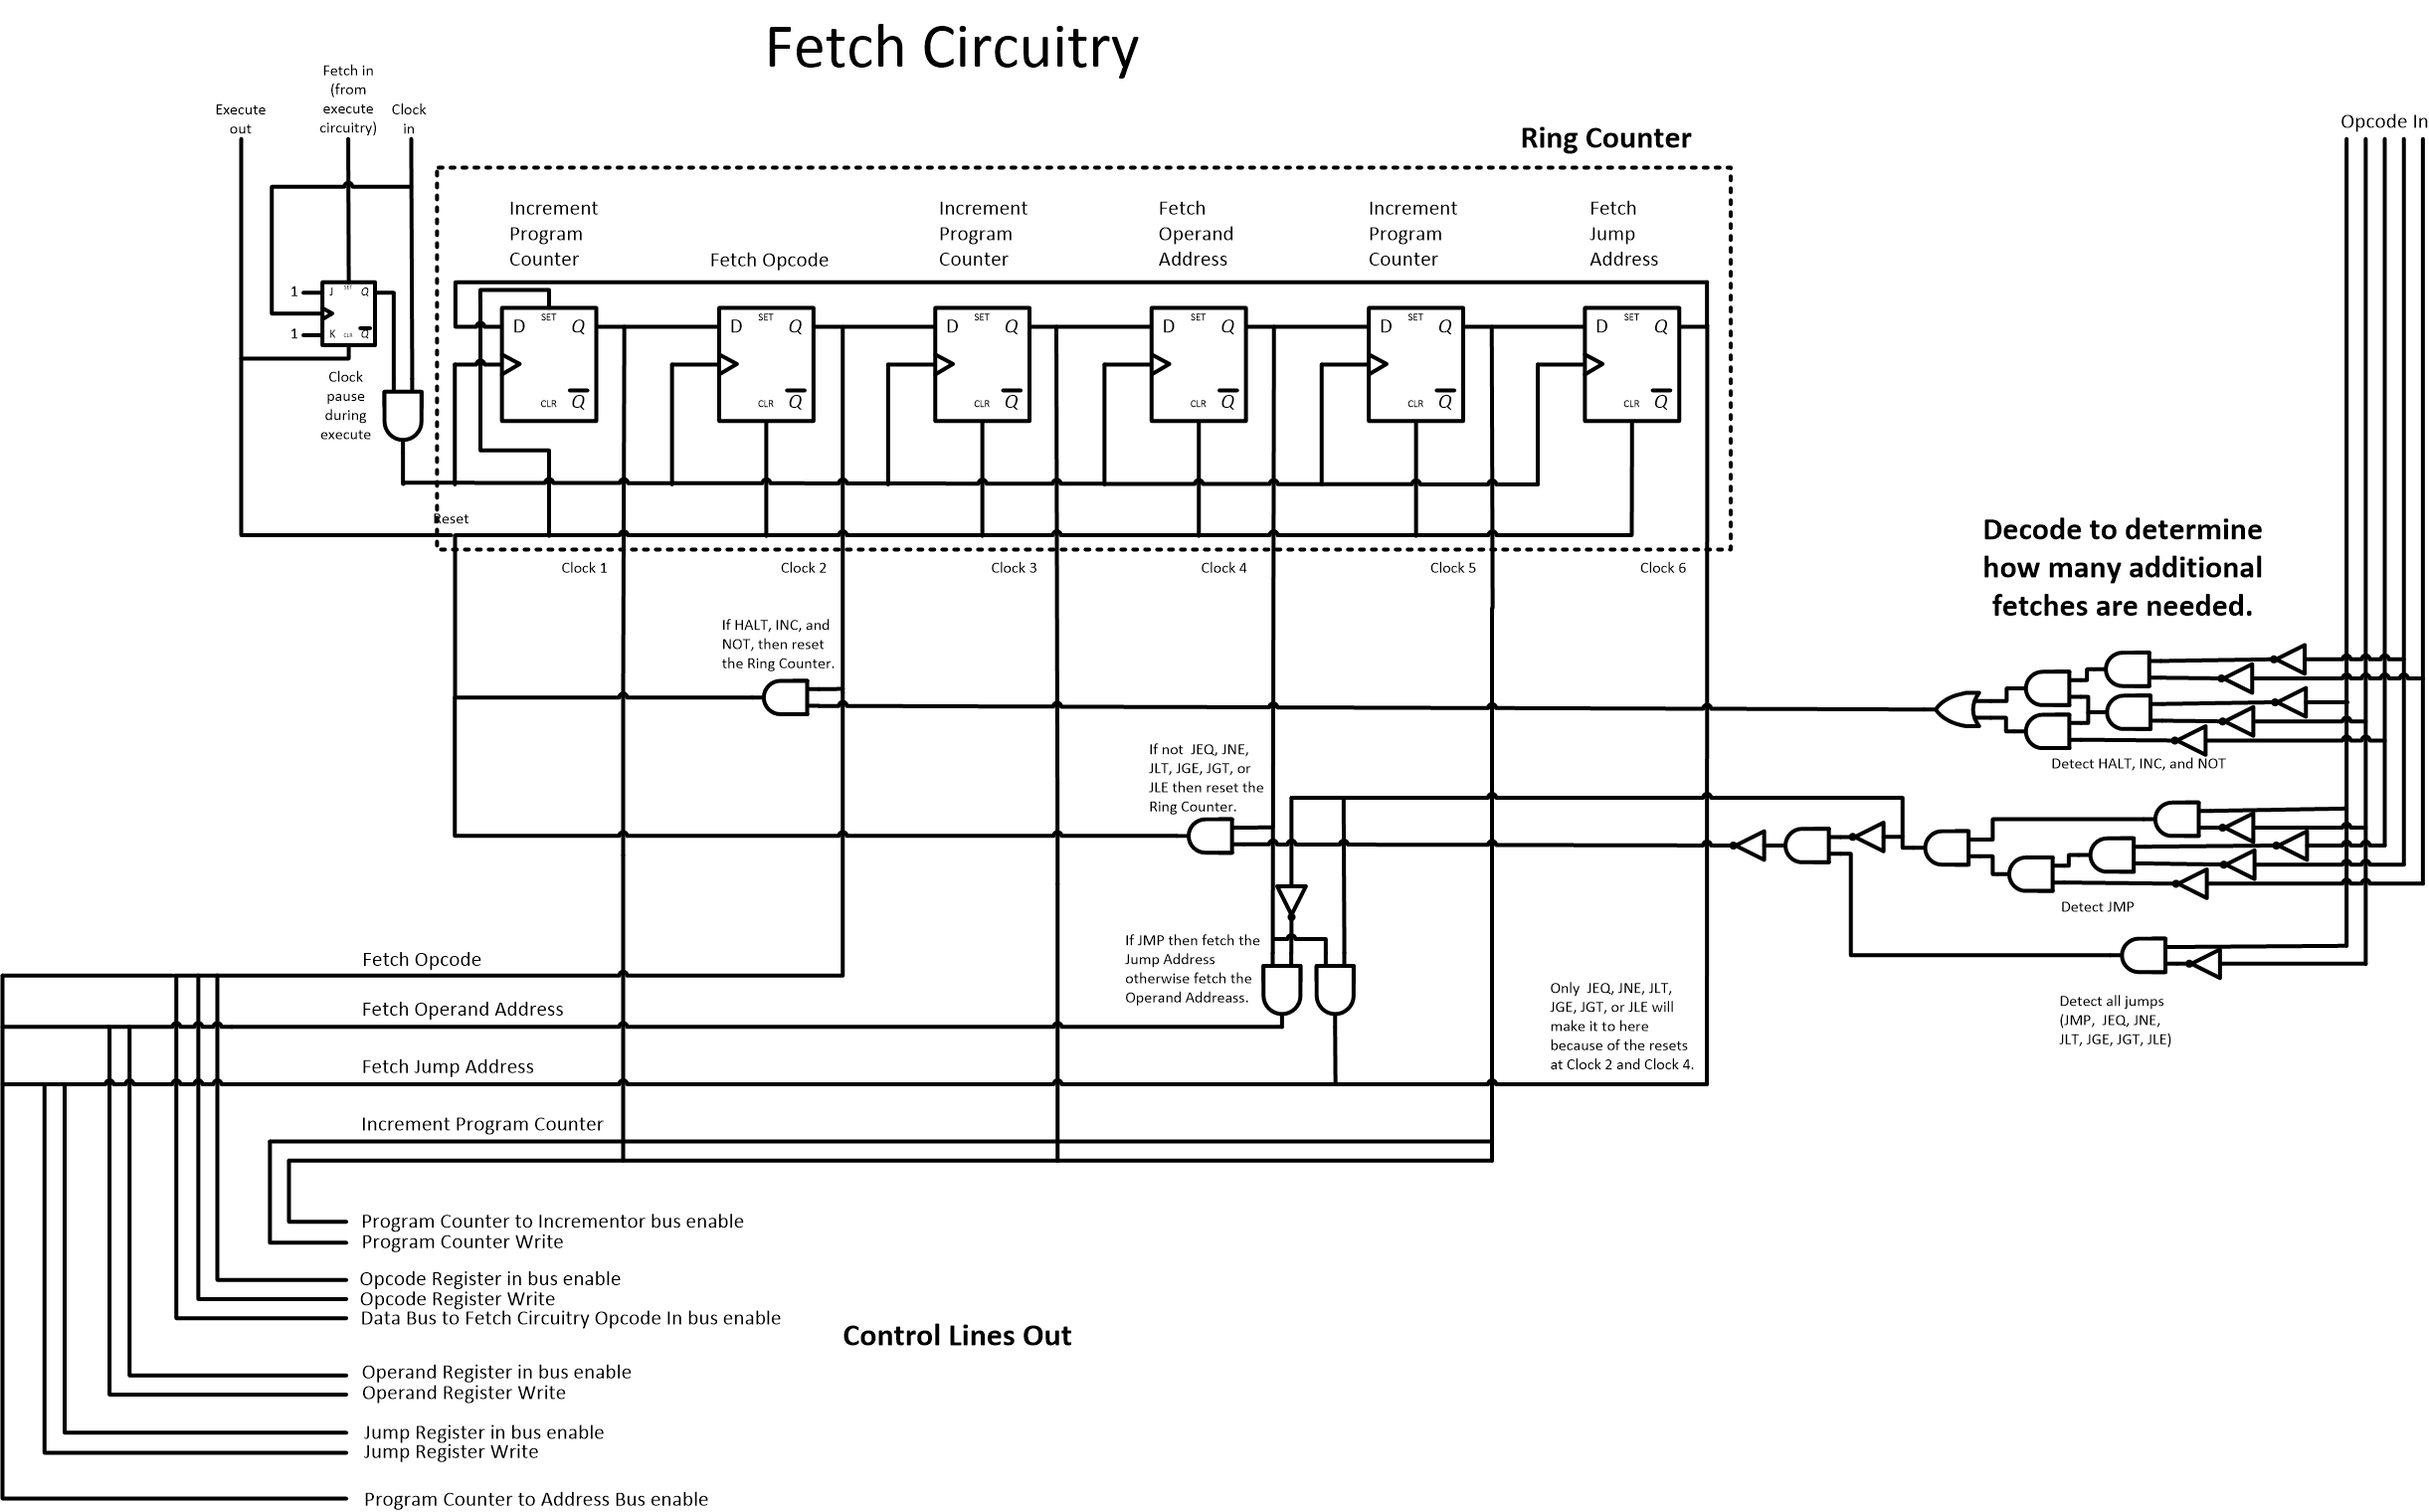 Fetch Circuitry